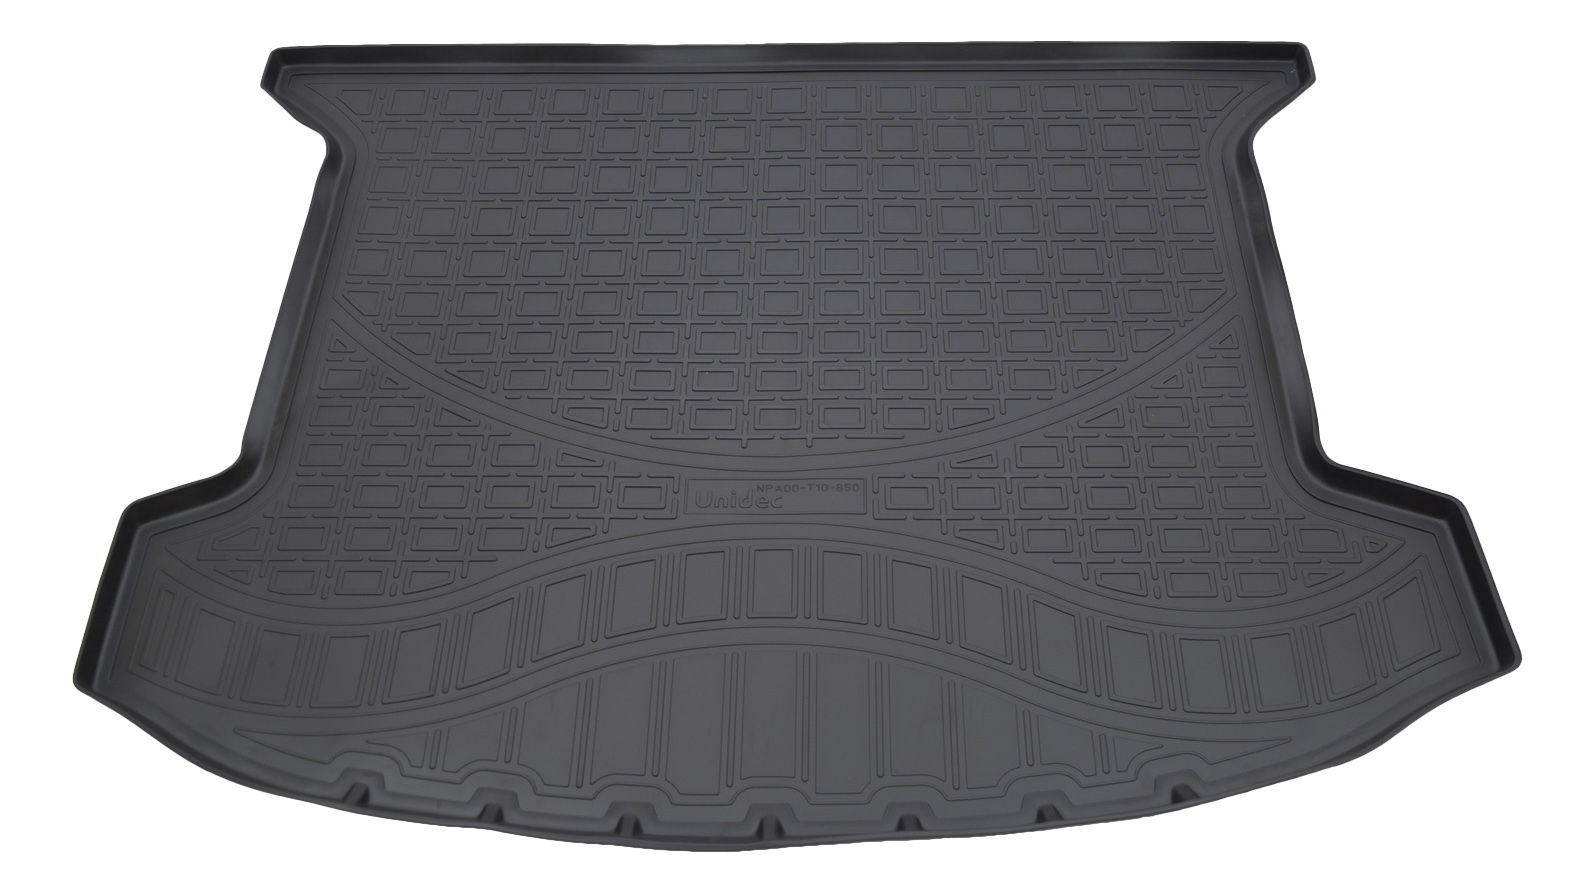 

Коврик в багажник автомобиля для Cadillac Norplast (NPA00-T10-850), коврик для багажника Cadillac xt5 (2016-) NPA00-T10-850